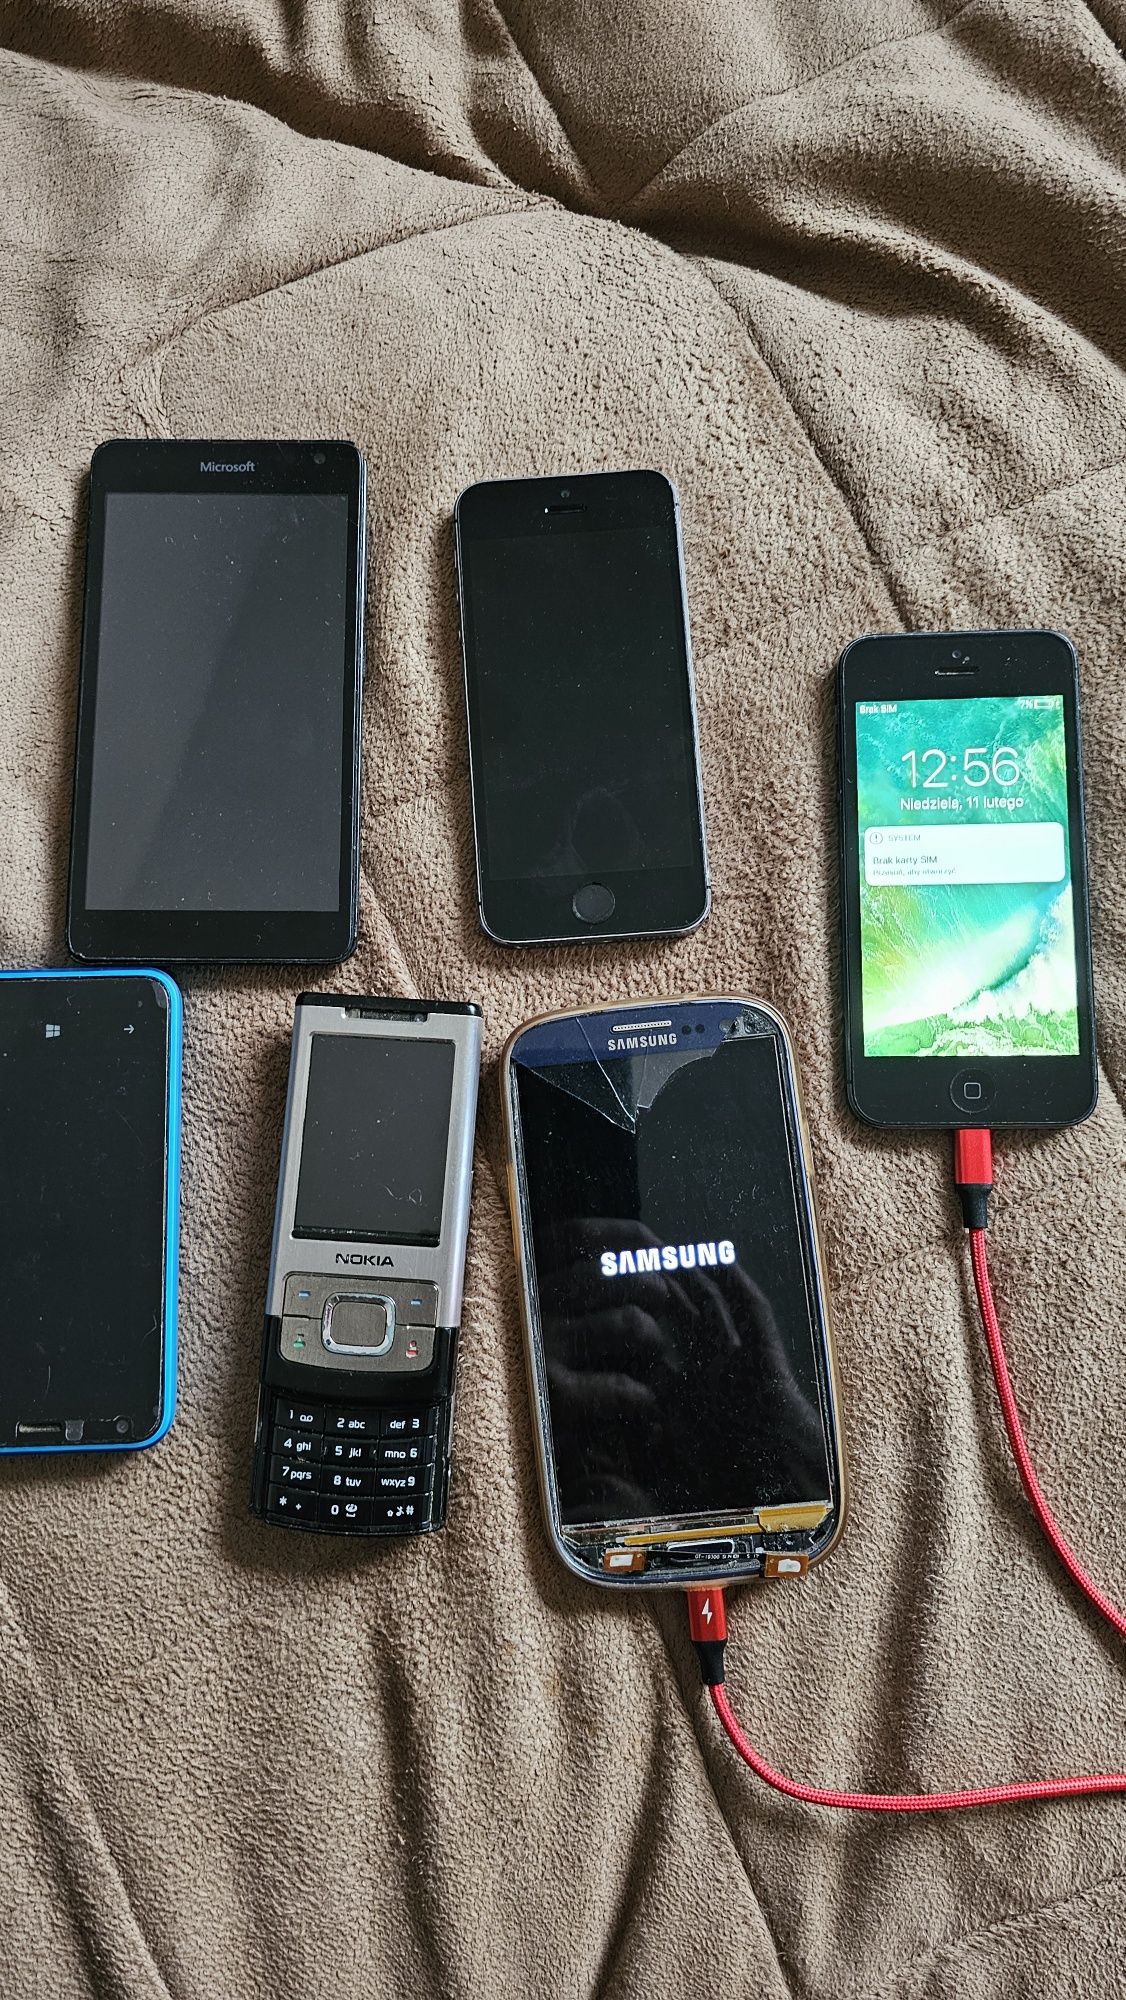 6 tel - 2x iPhone, 2xNokia, Samsung, Microsoft